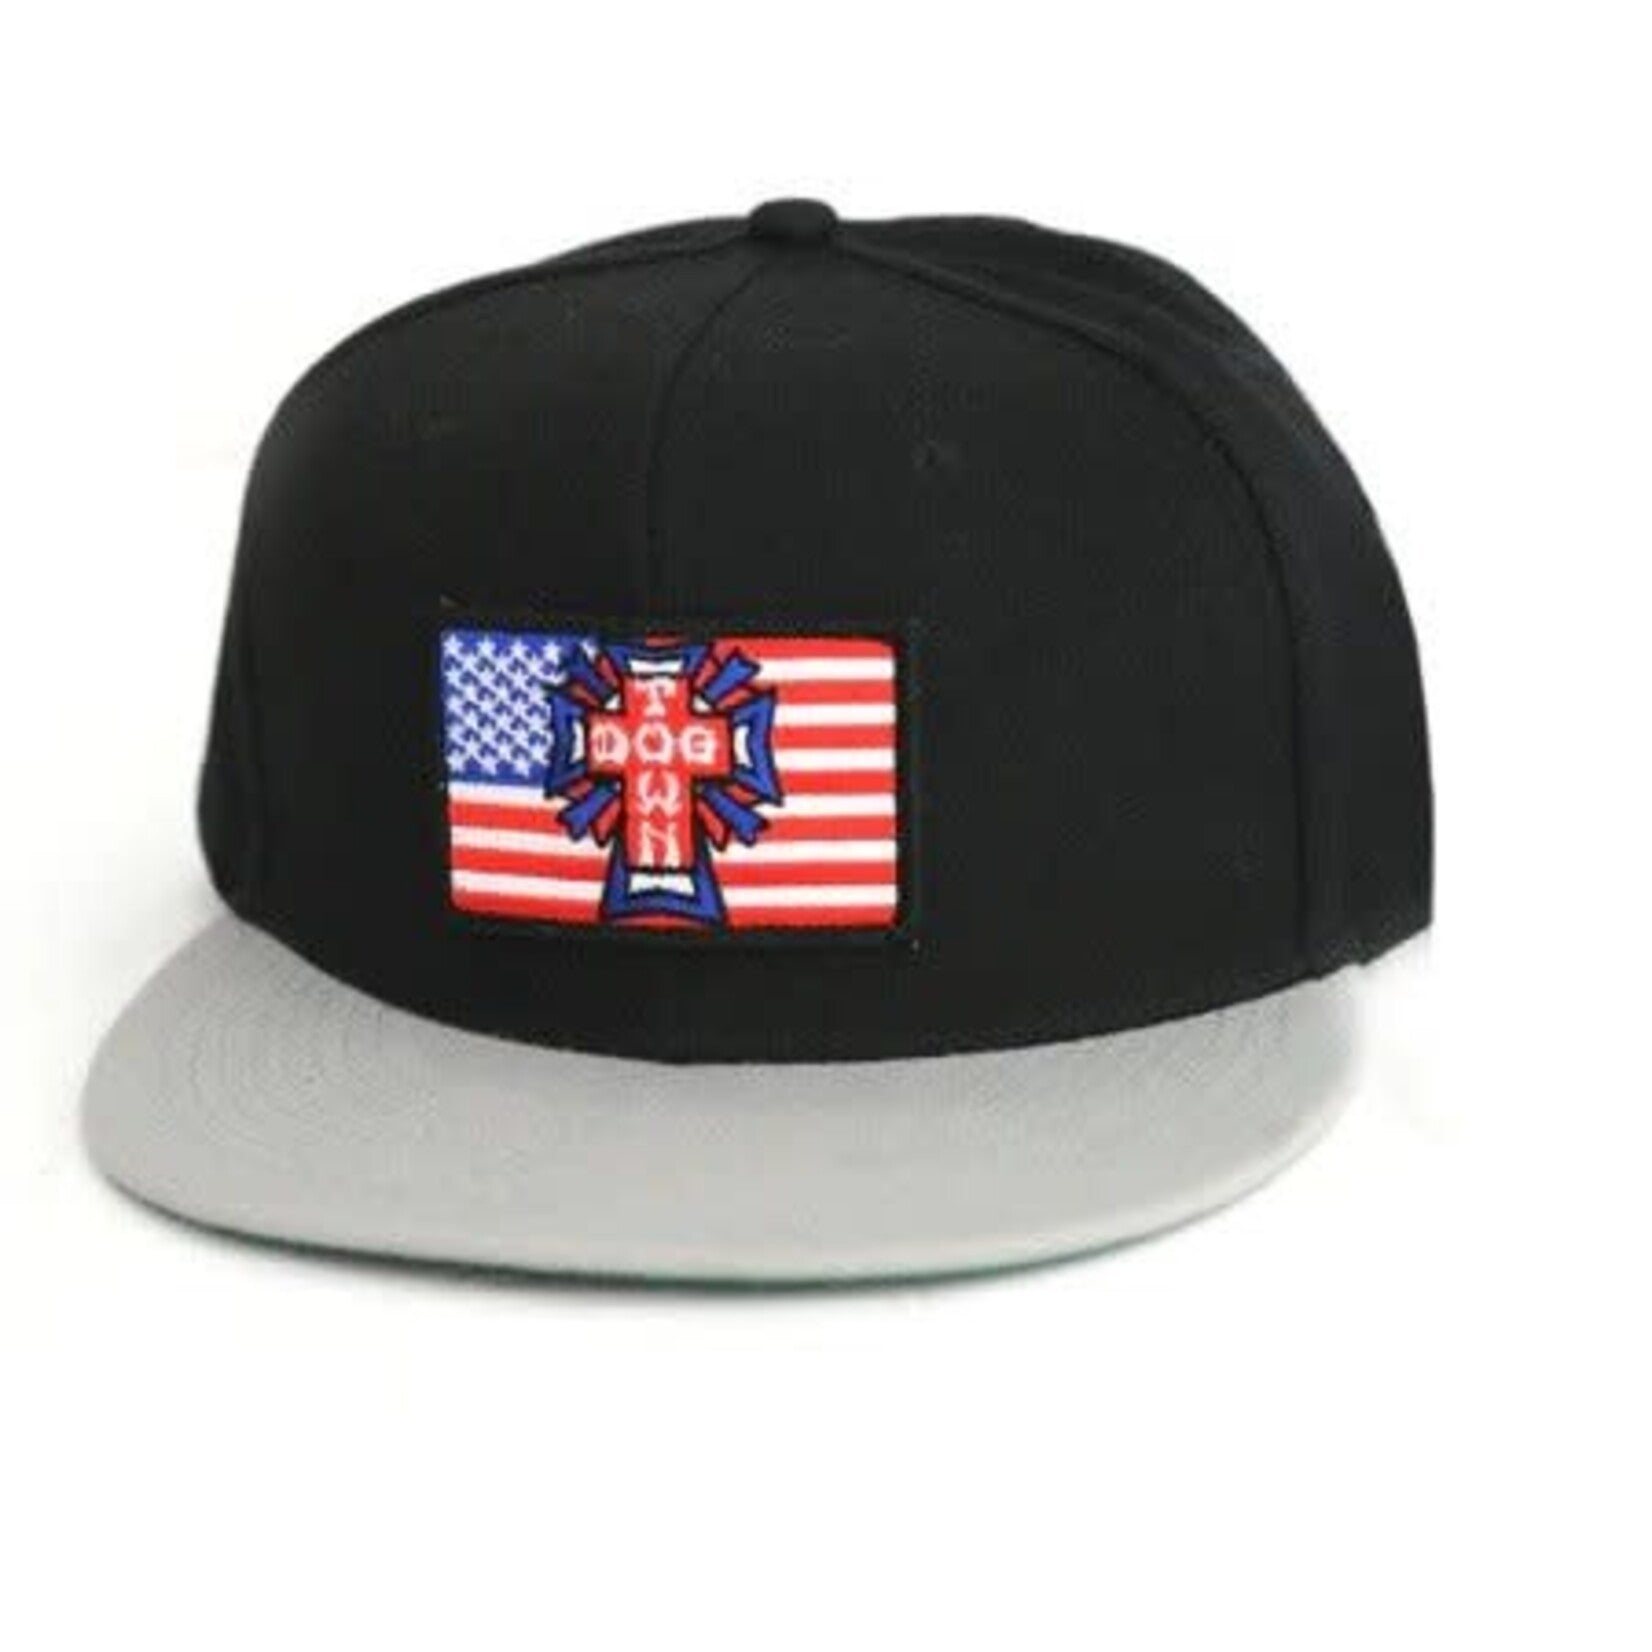 DOGTOWN Flag Patch snapback hat - Grey/Black